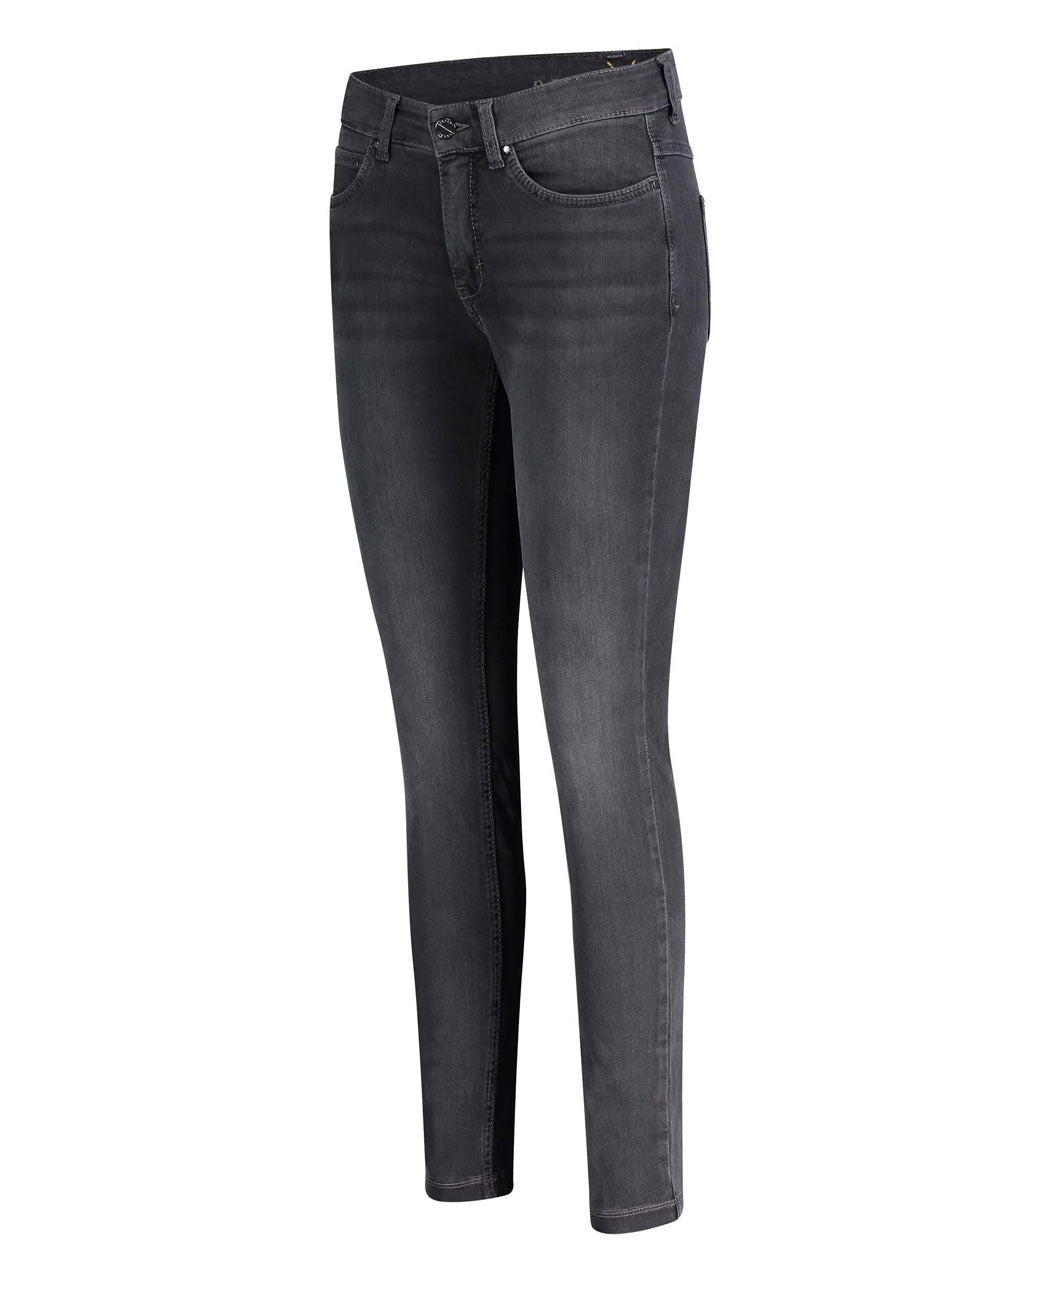 kleding lange vrouwen mac jeans dream skinny auth grey